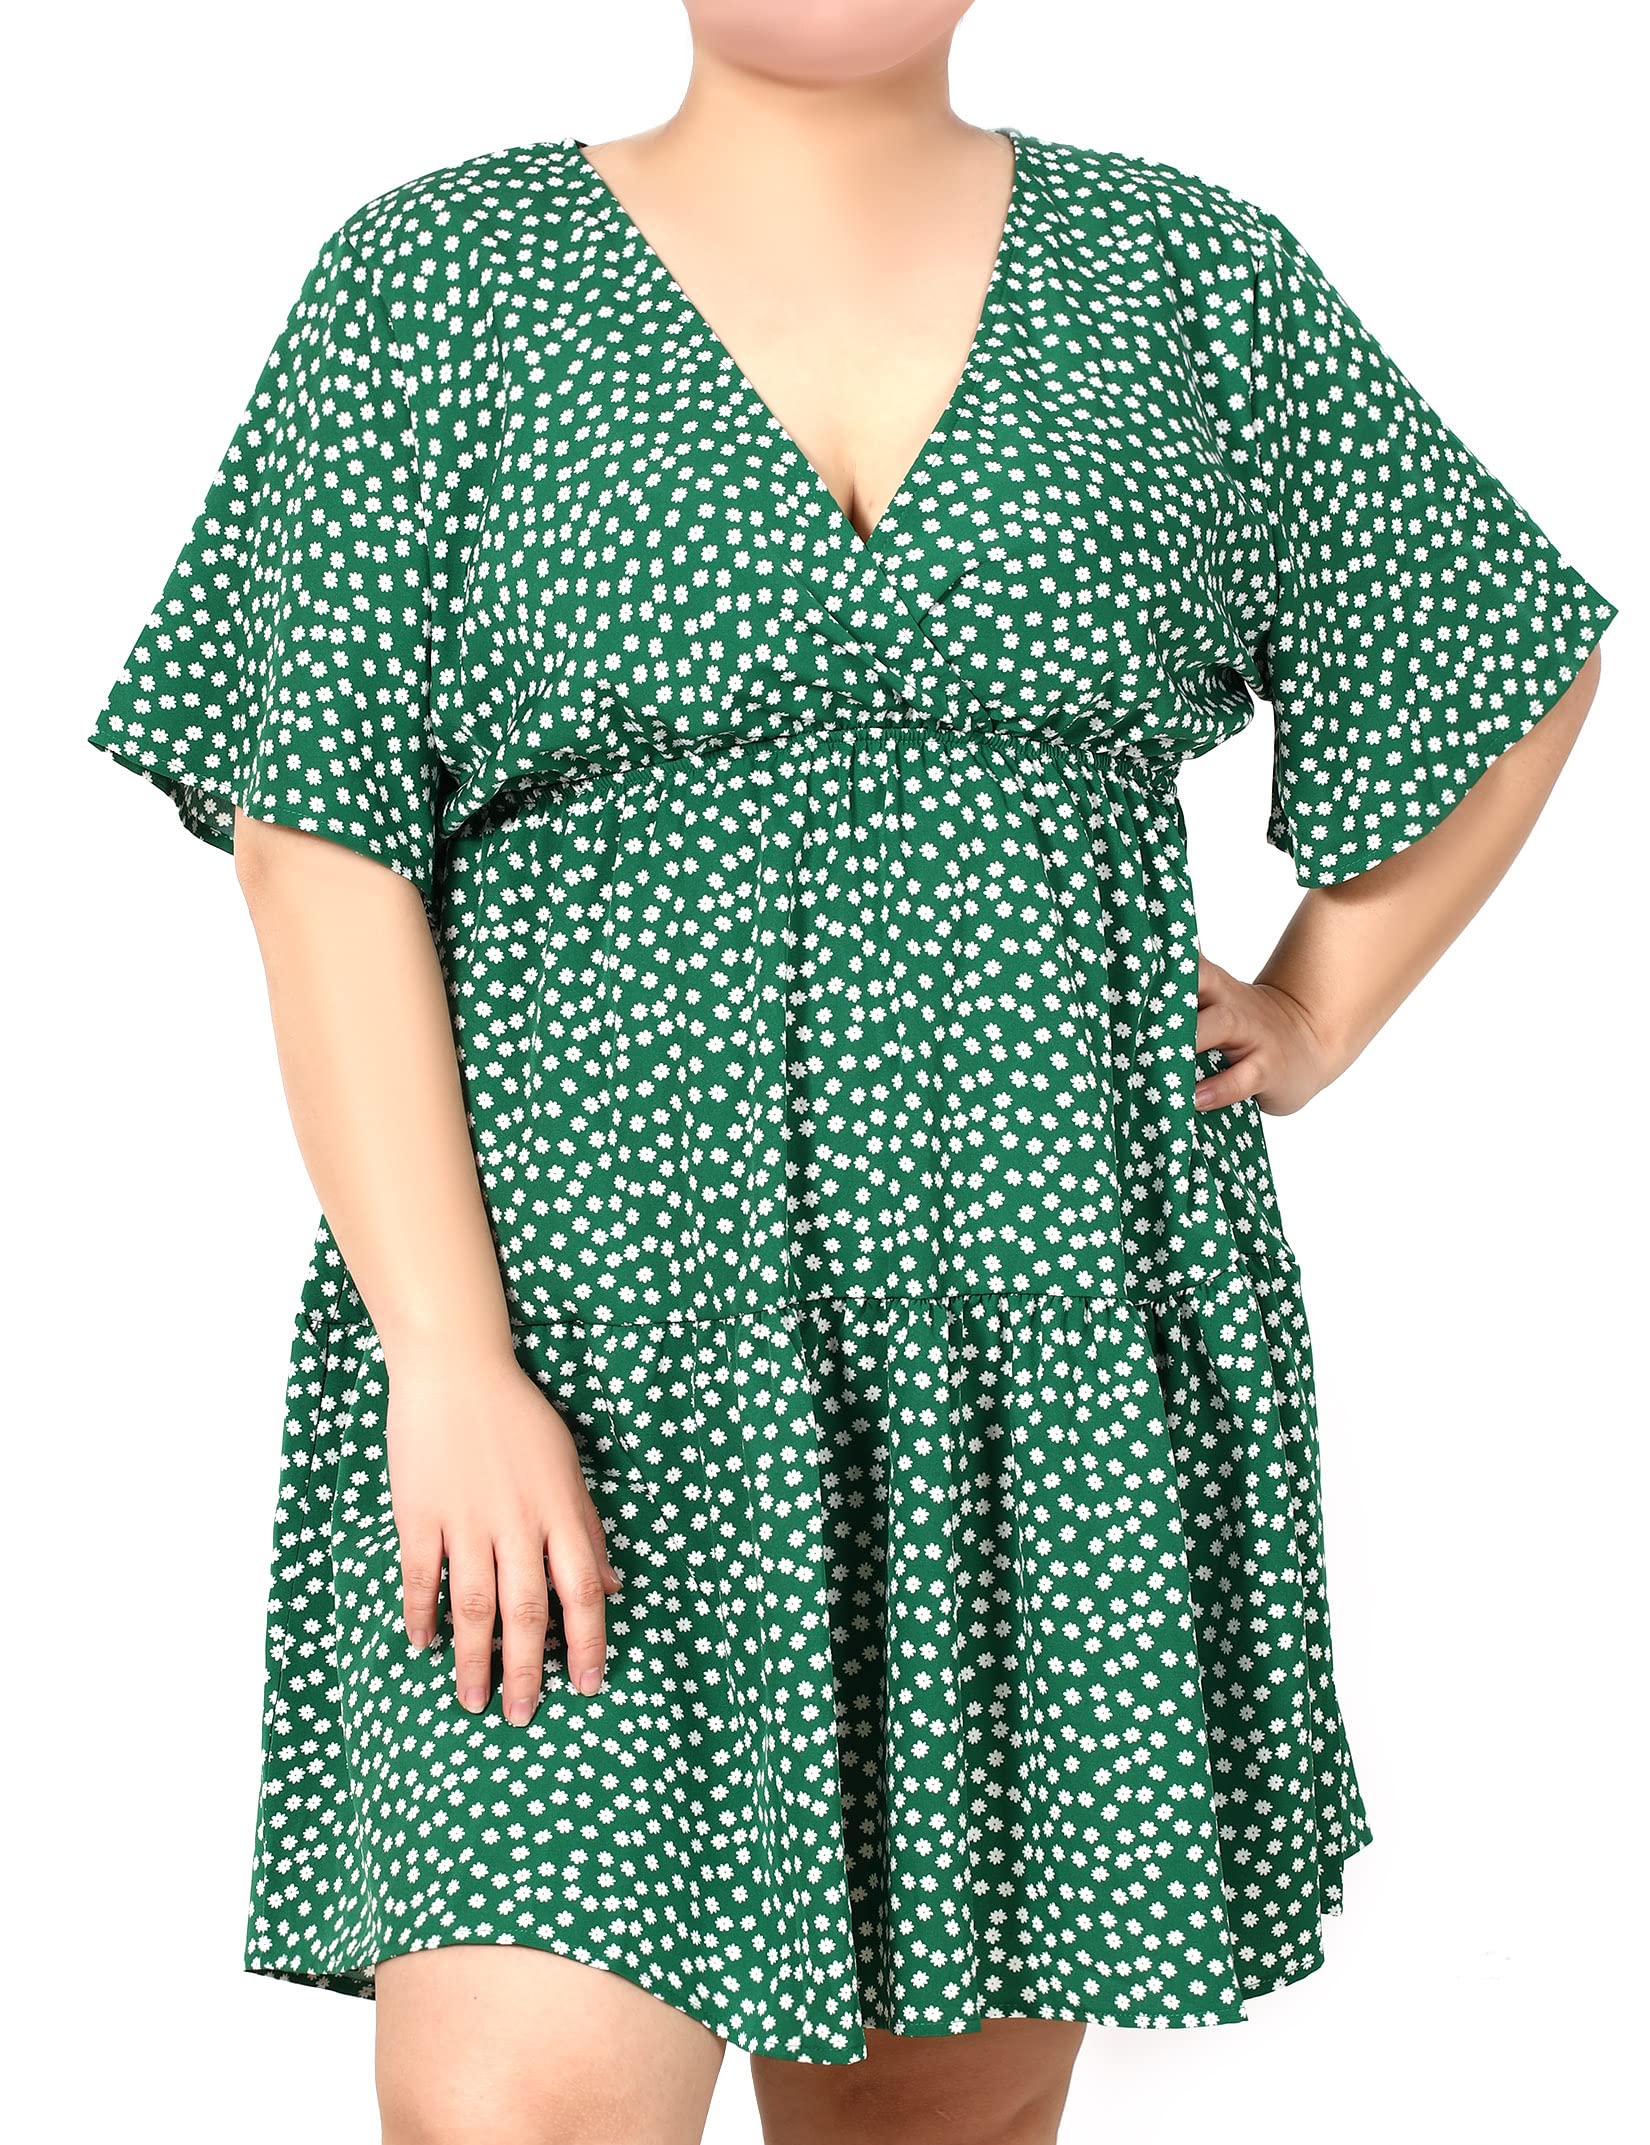 Floral Plus Size Summer Dresses for Women-Green丨Moon